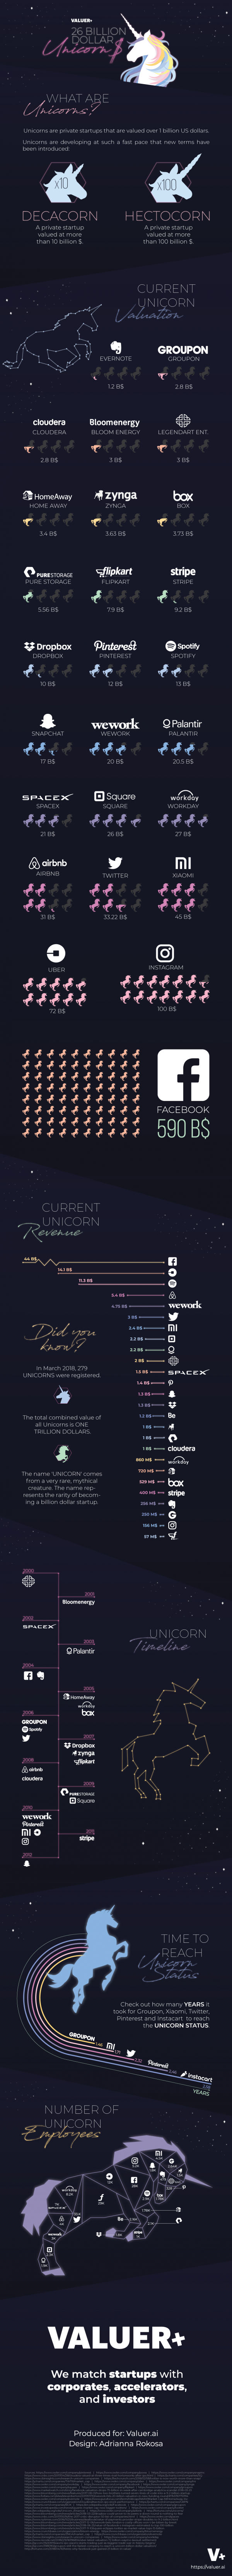 unicorn infographic with unicorn values and revenue